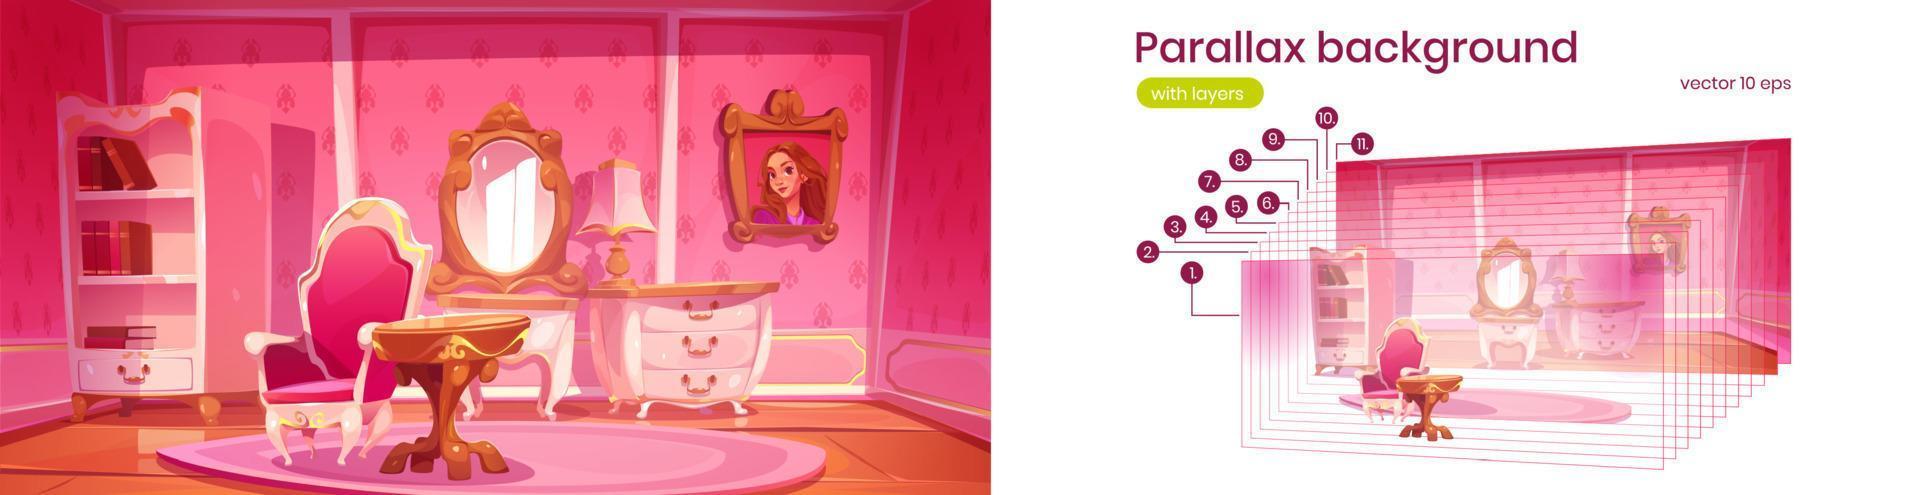 fondo de paralaje princesa rosa sala de estar vector